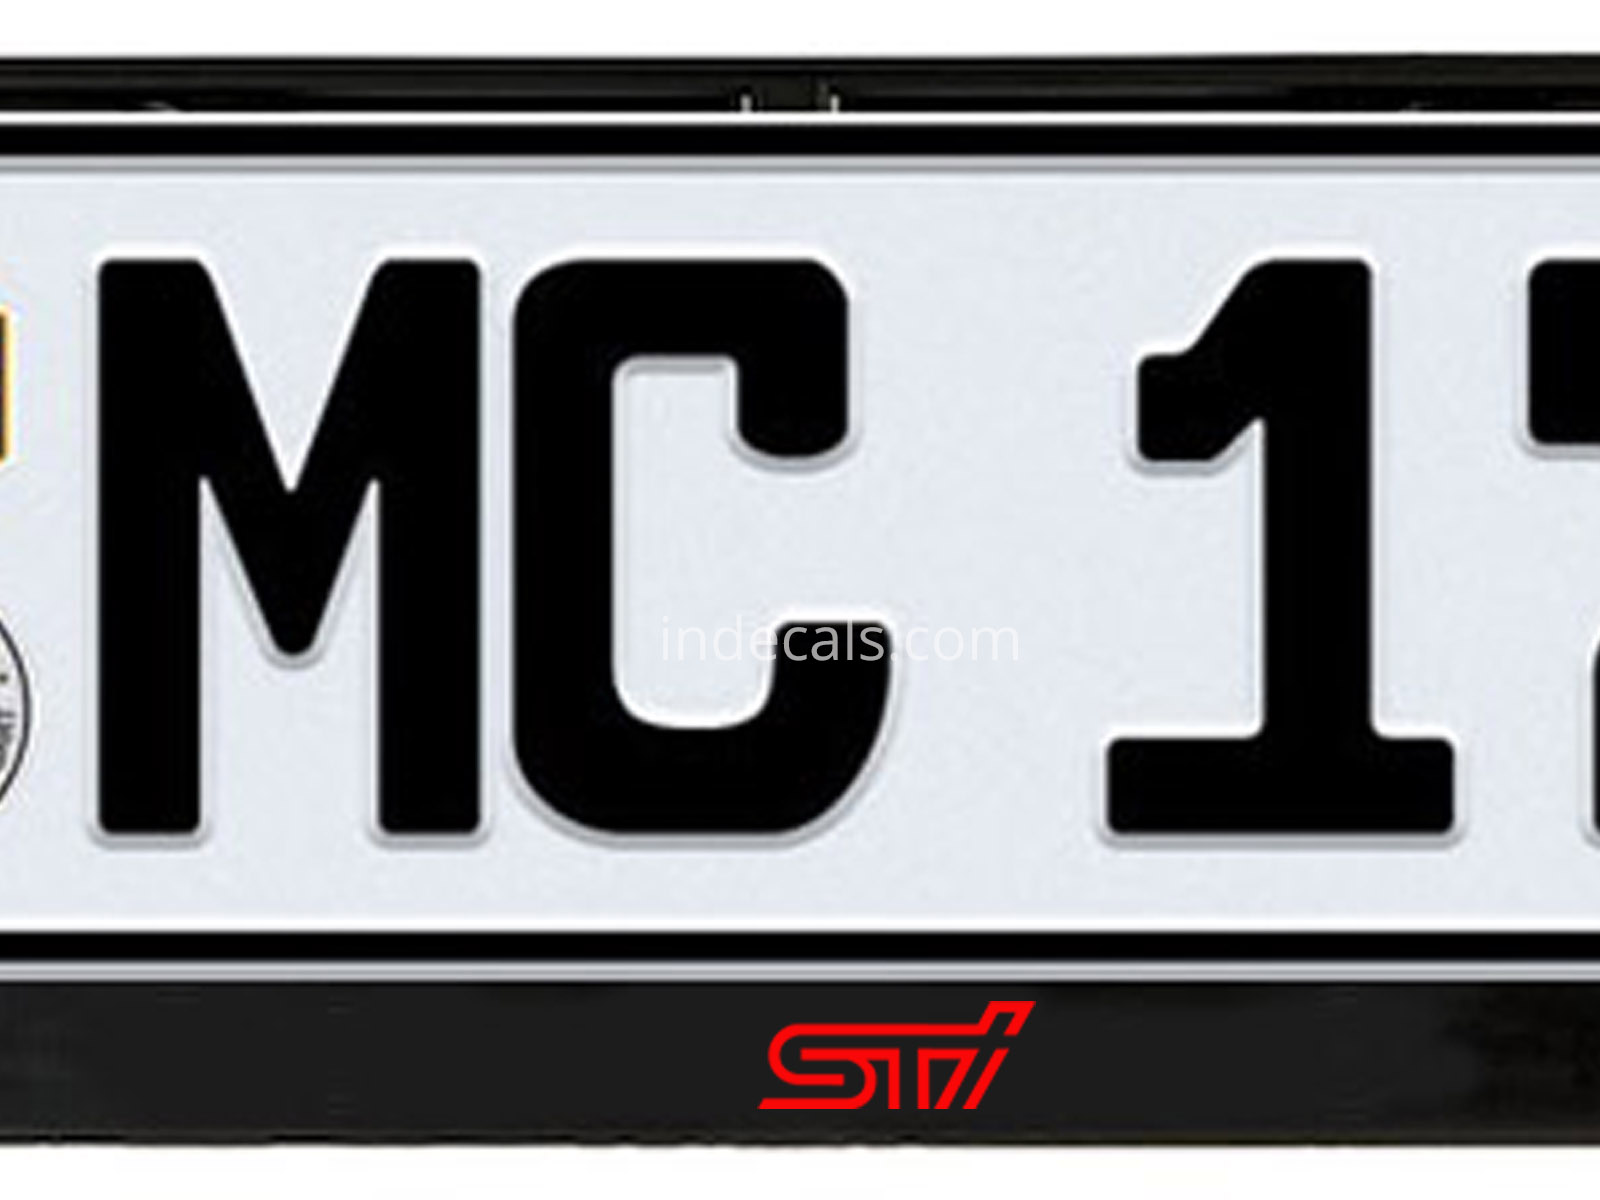 2 x Subaru STI stickers for License Plate Frame - Red